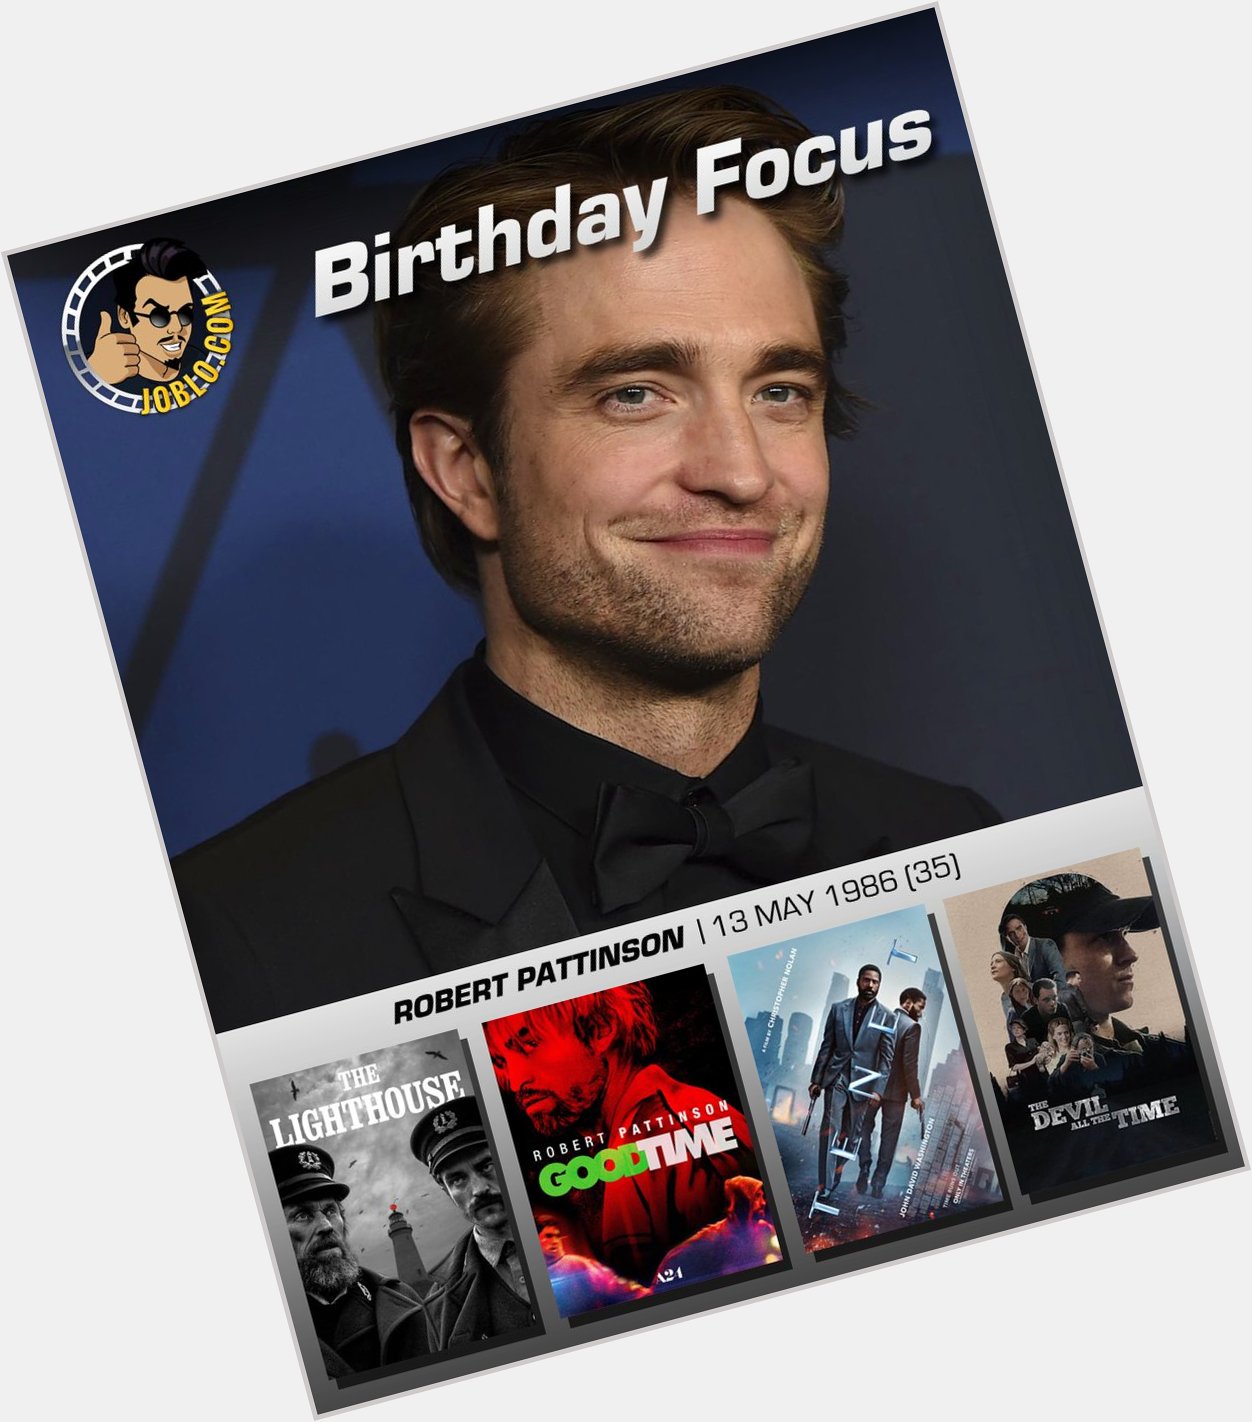 Wishing Robert Pattinson a very happy 35th birthday! 